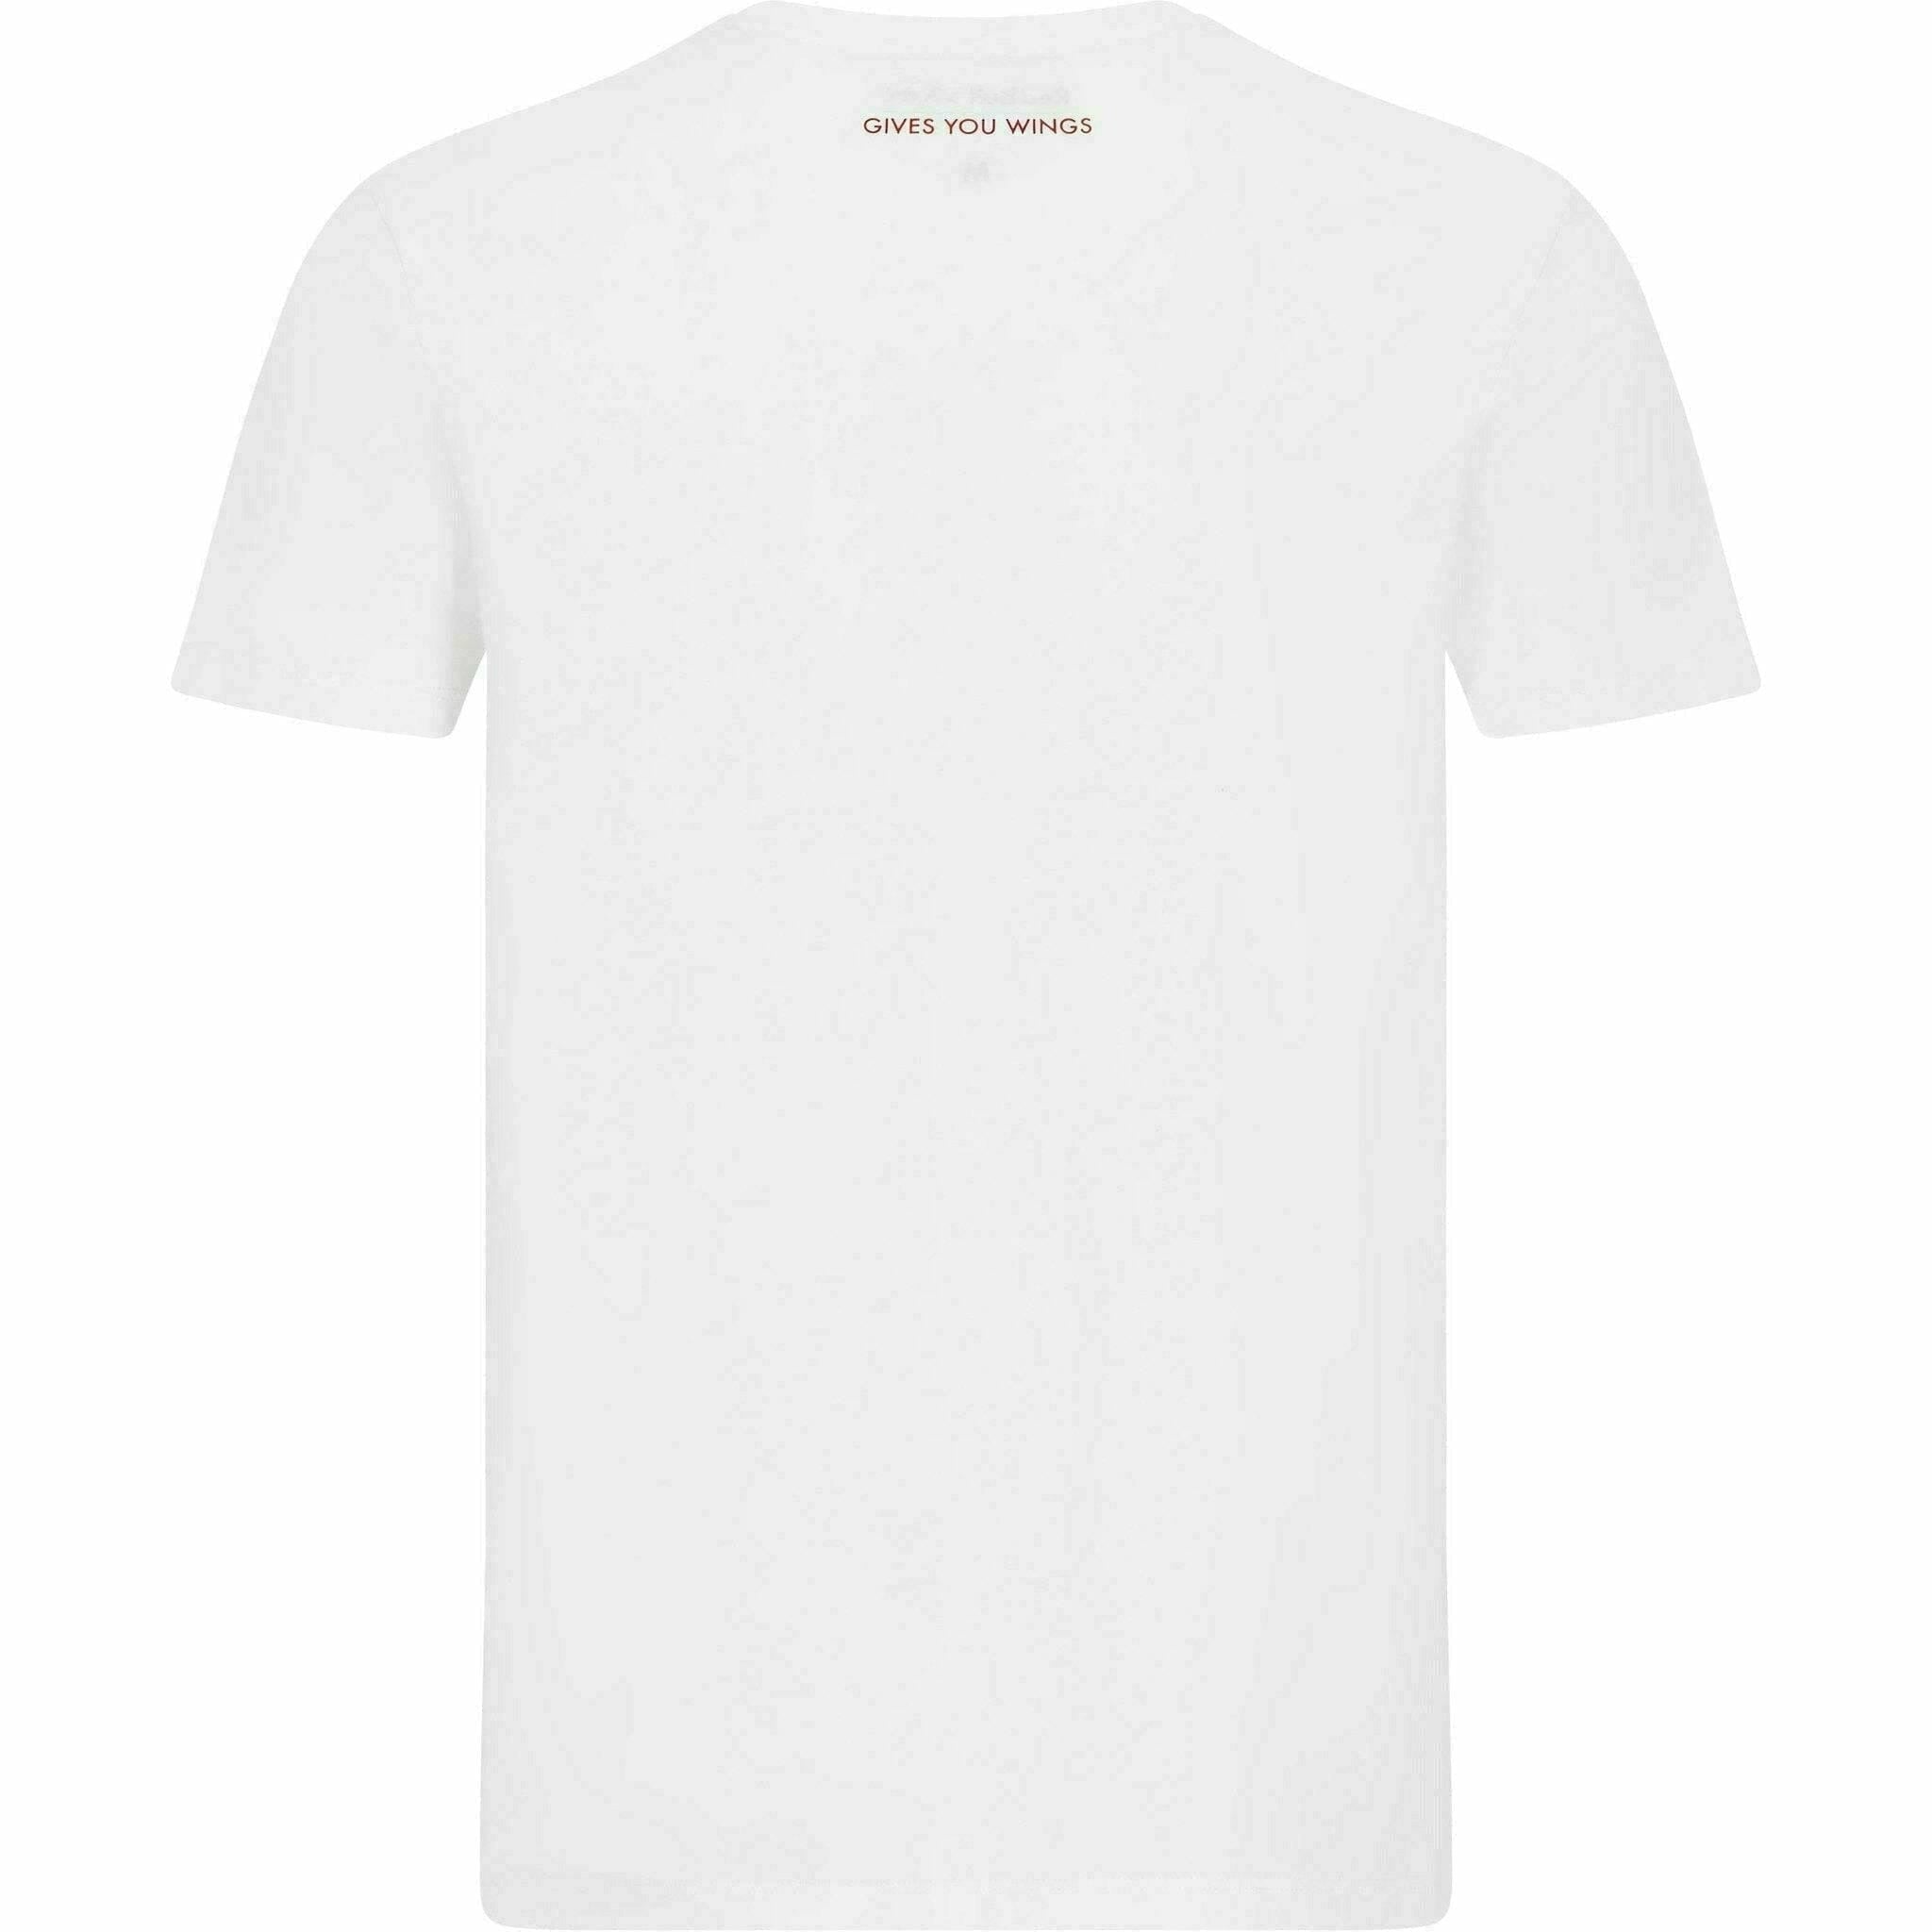 Red Bull Racing F1 Men's Large Logo T-Shirt - Navy/White/Orange